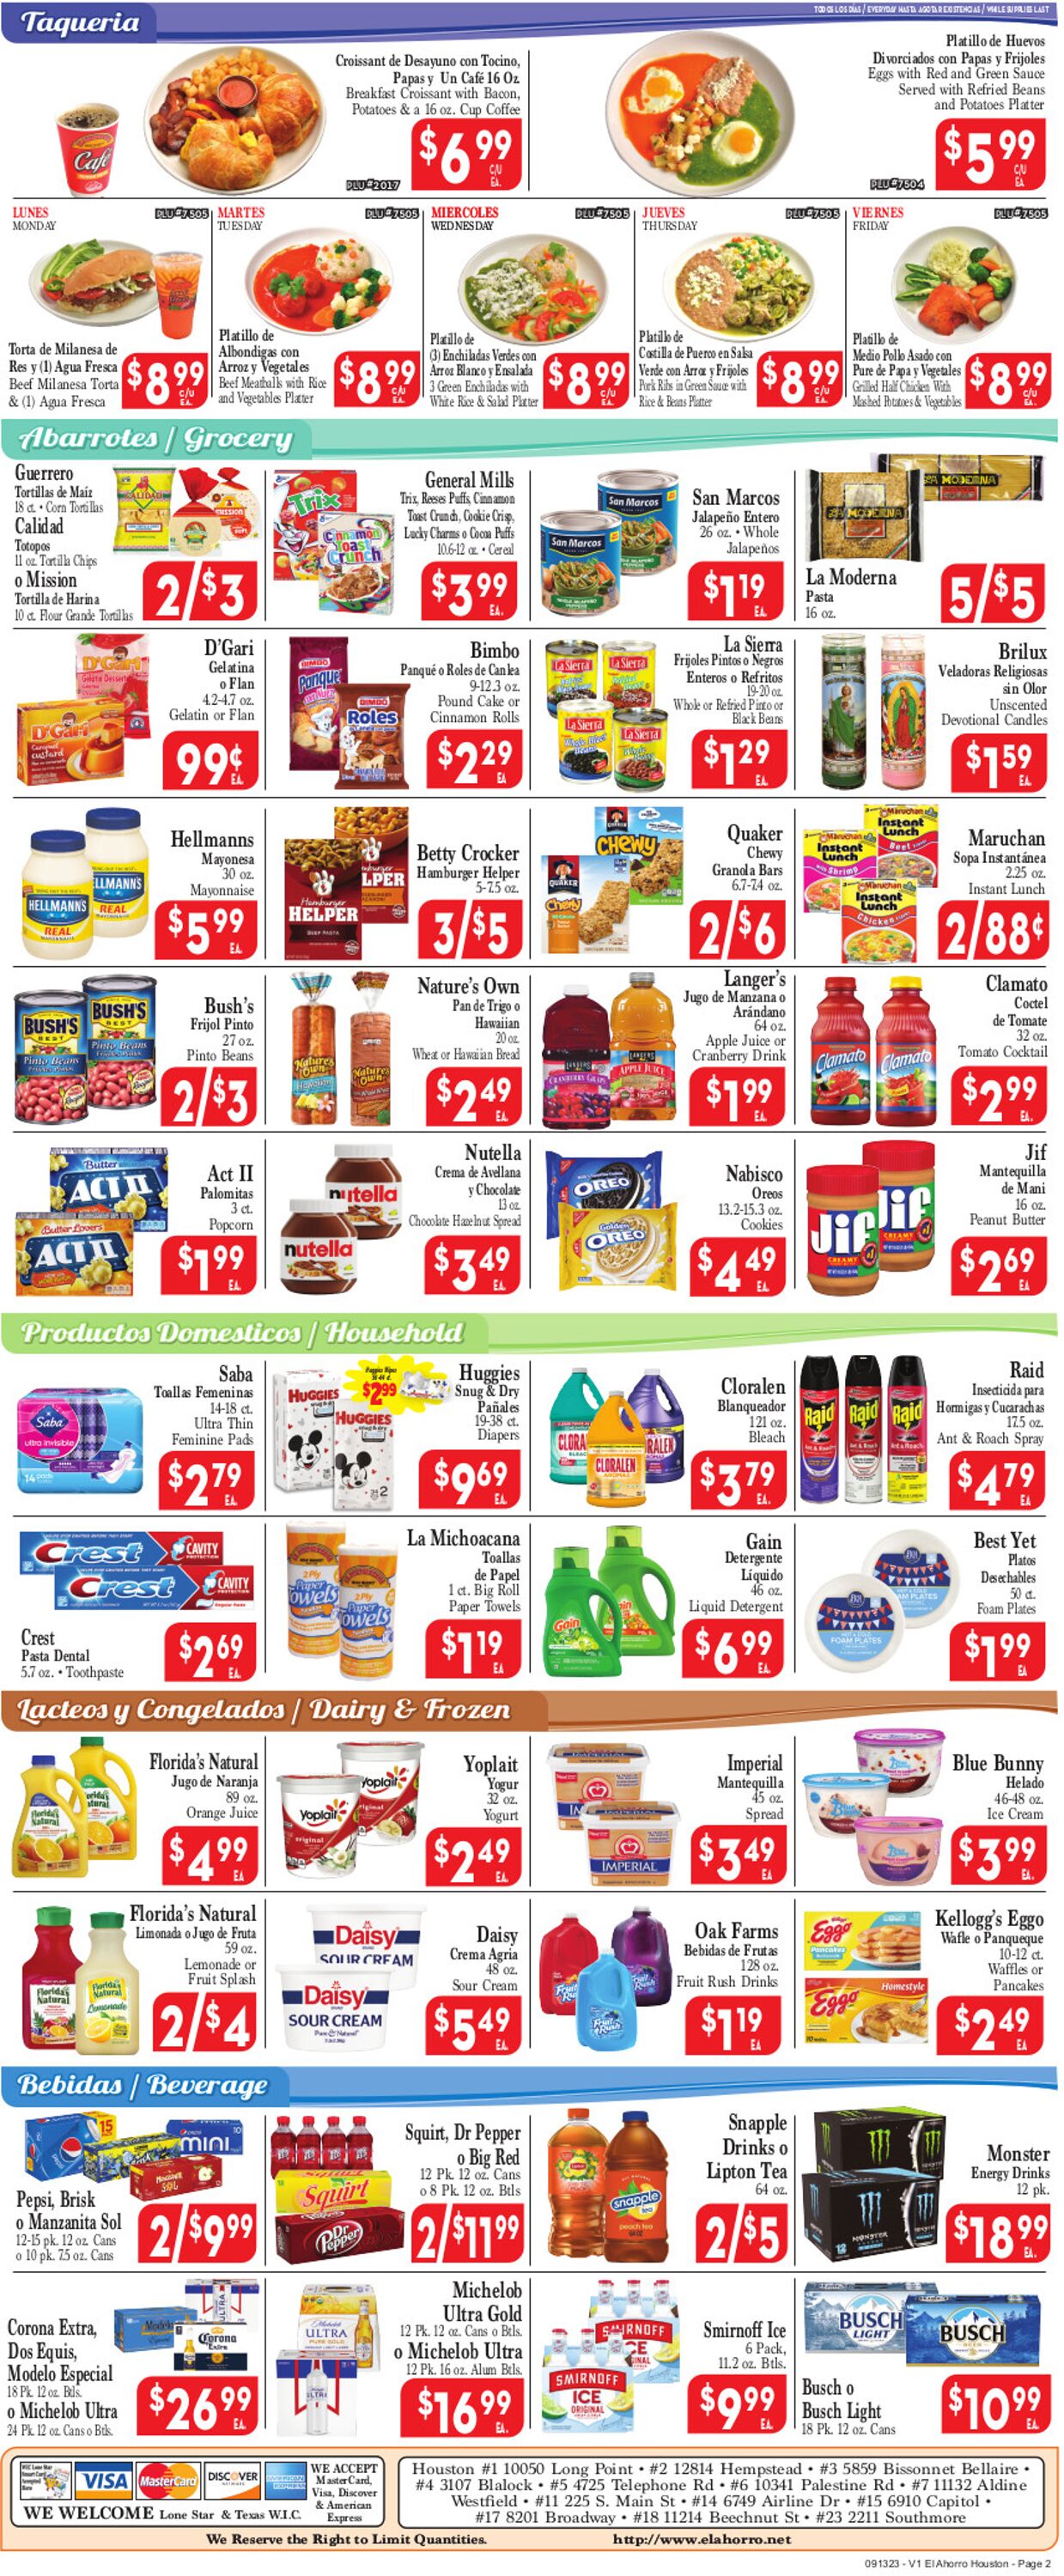 Catalogue El Ahorro Supermarket from 09/13/2023